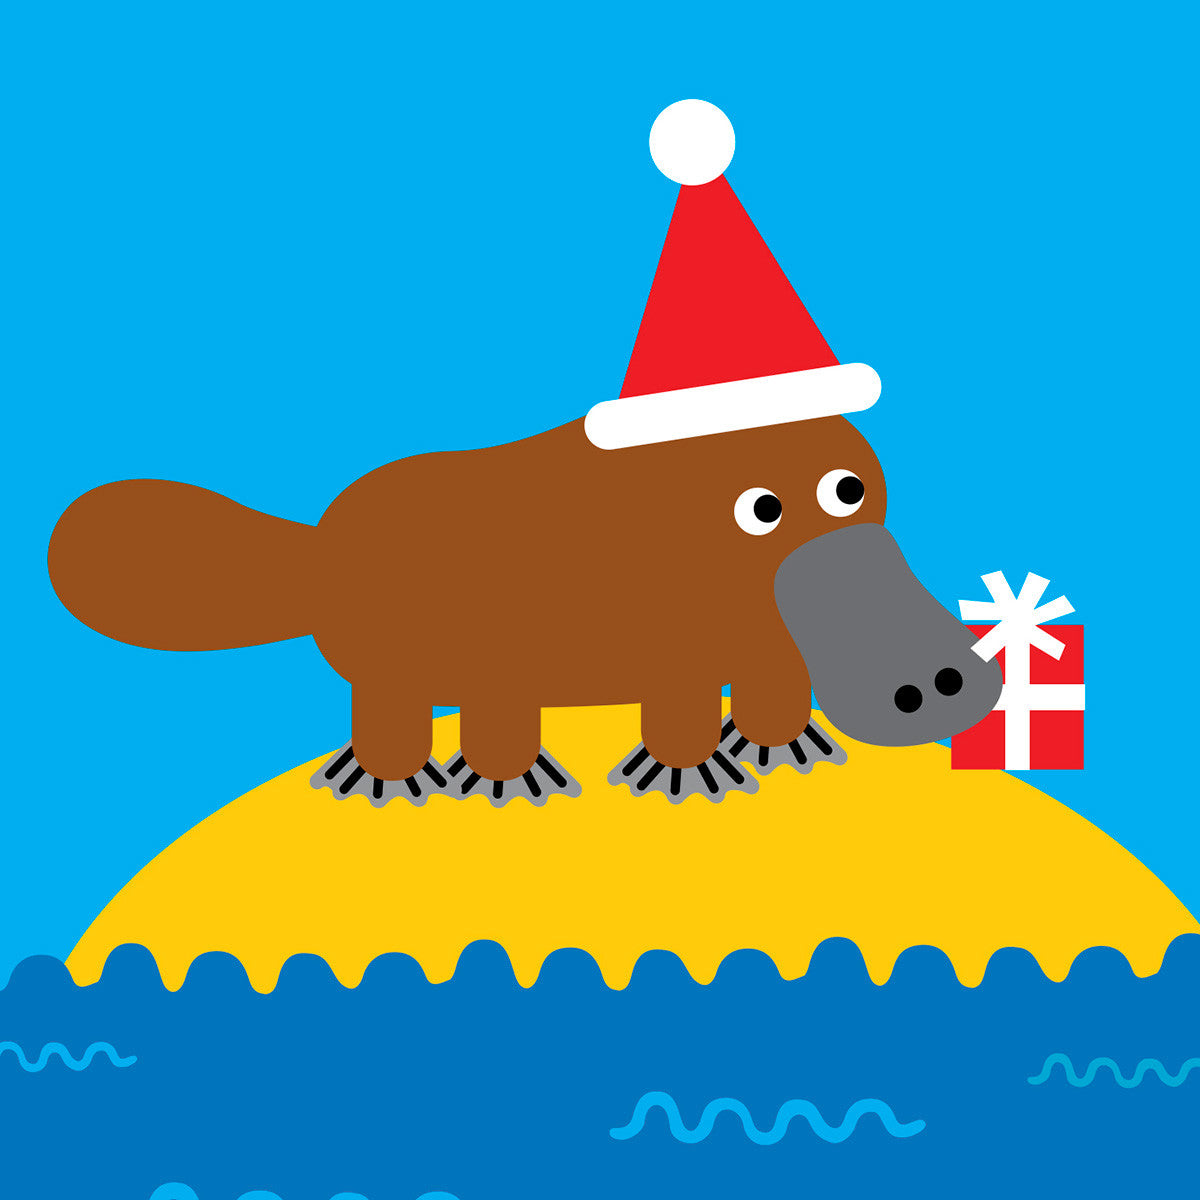 Platypus Christmas card